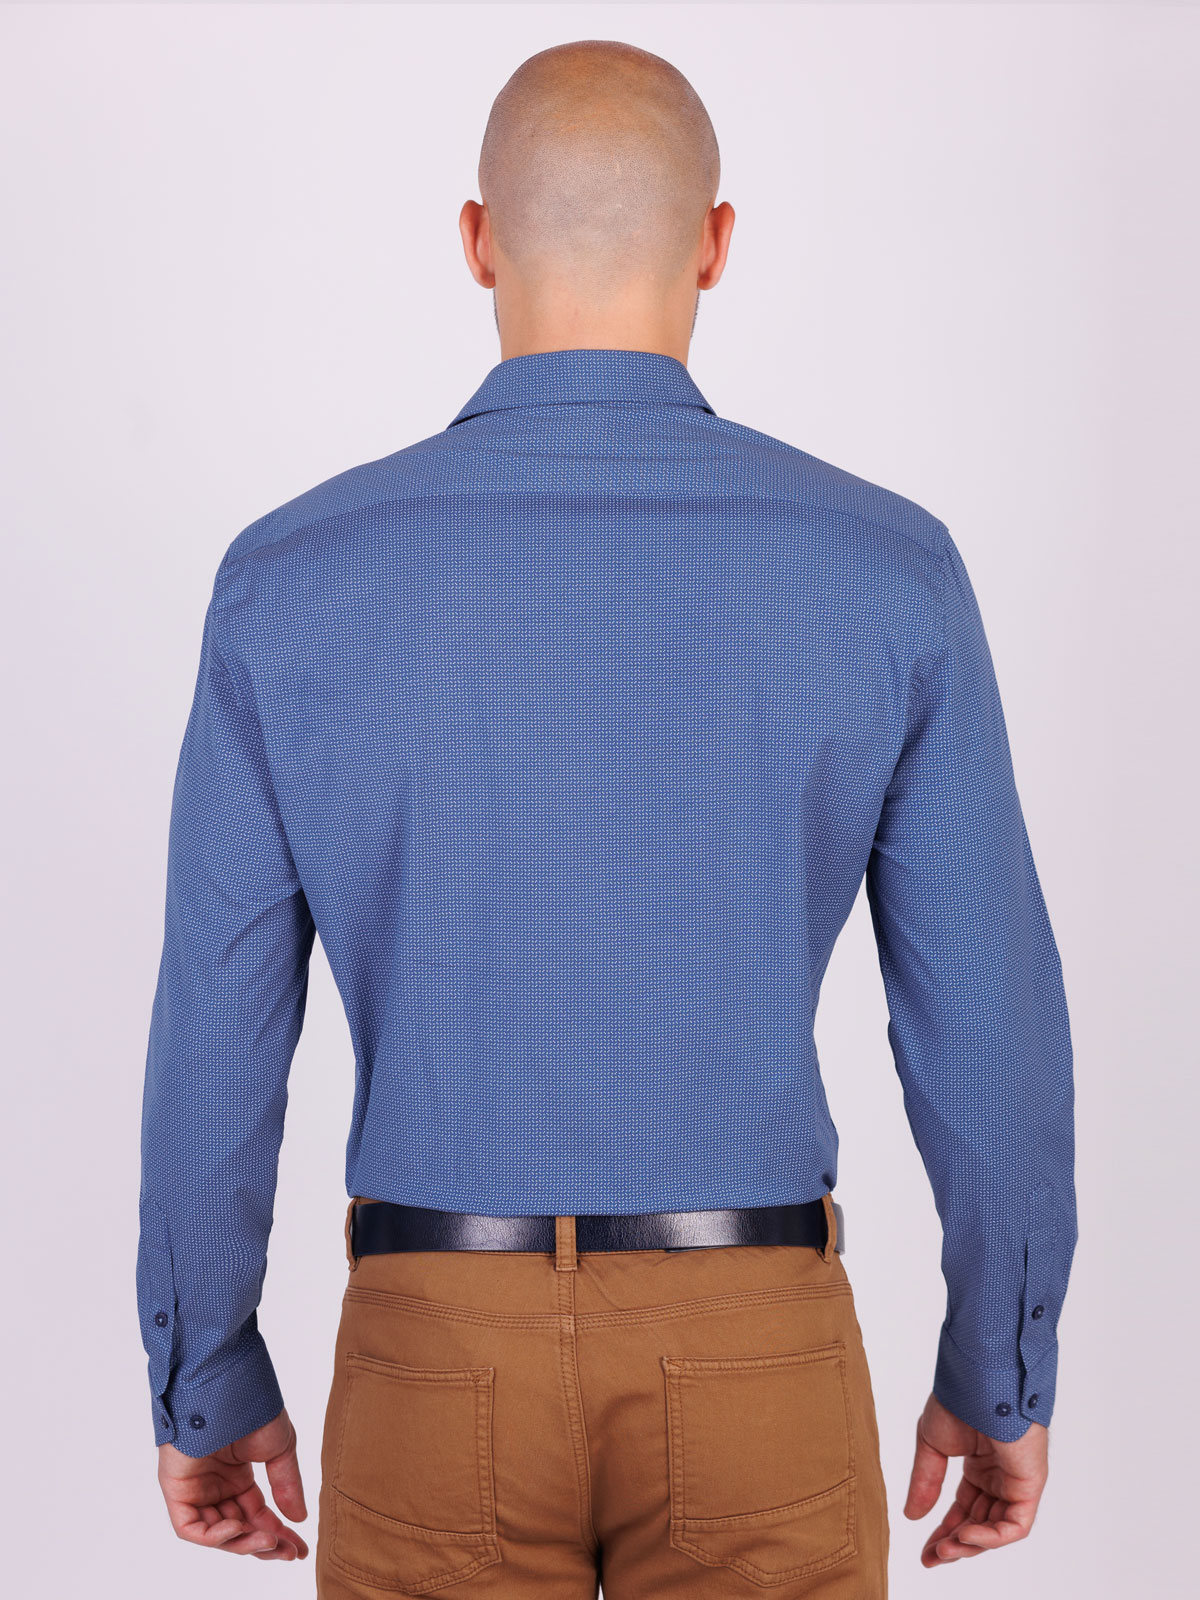 Elegant shirt in dark blue max - 21581 € 44.43 img2